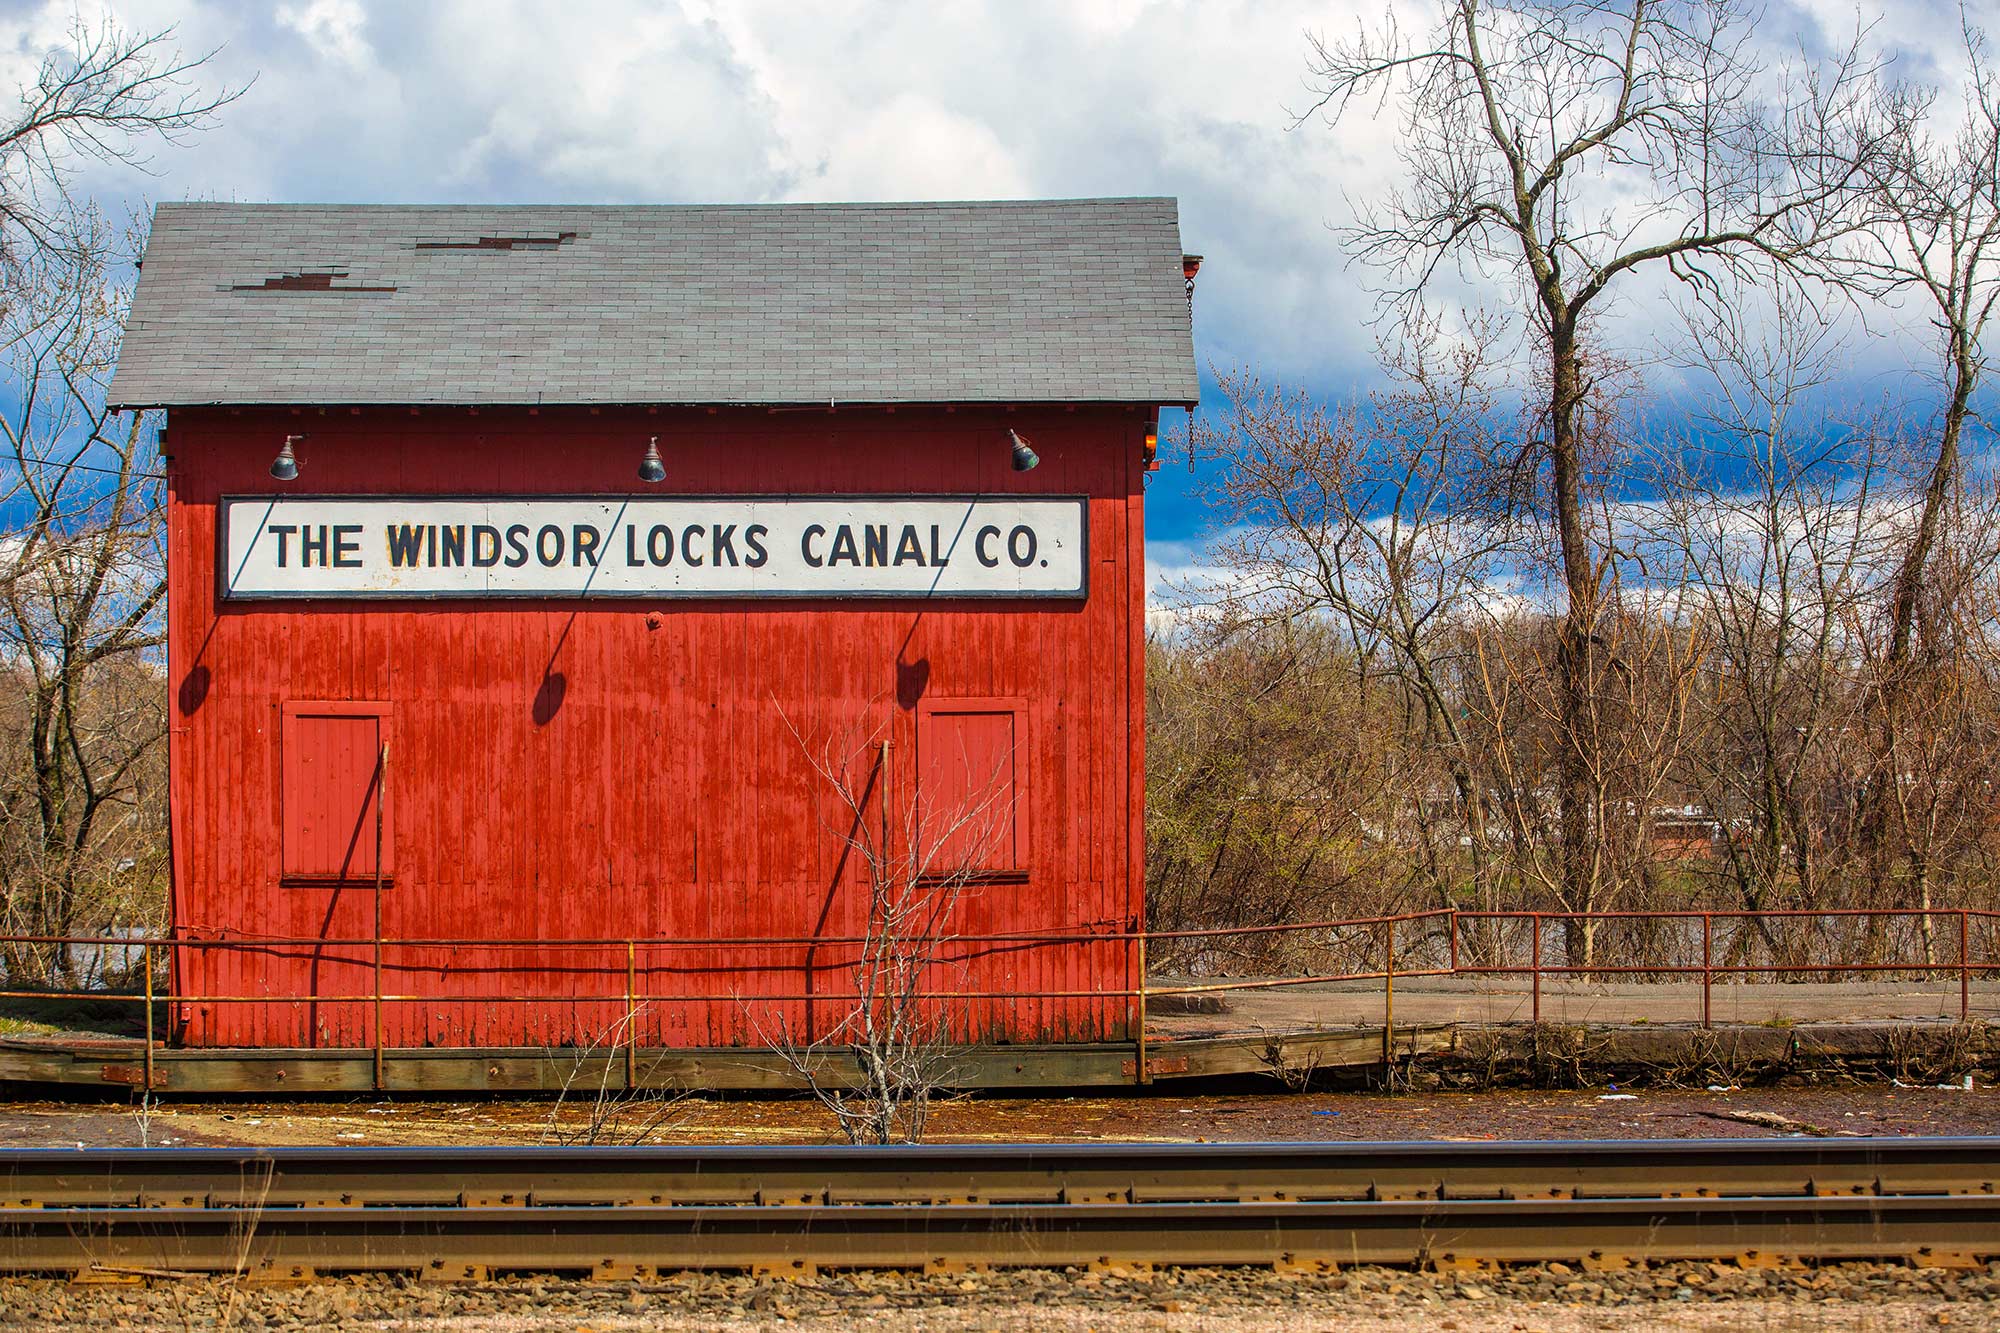 Windsor Locks Canal Co., Windsor Locks, CT  - 4/21/15